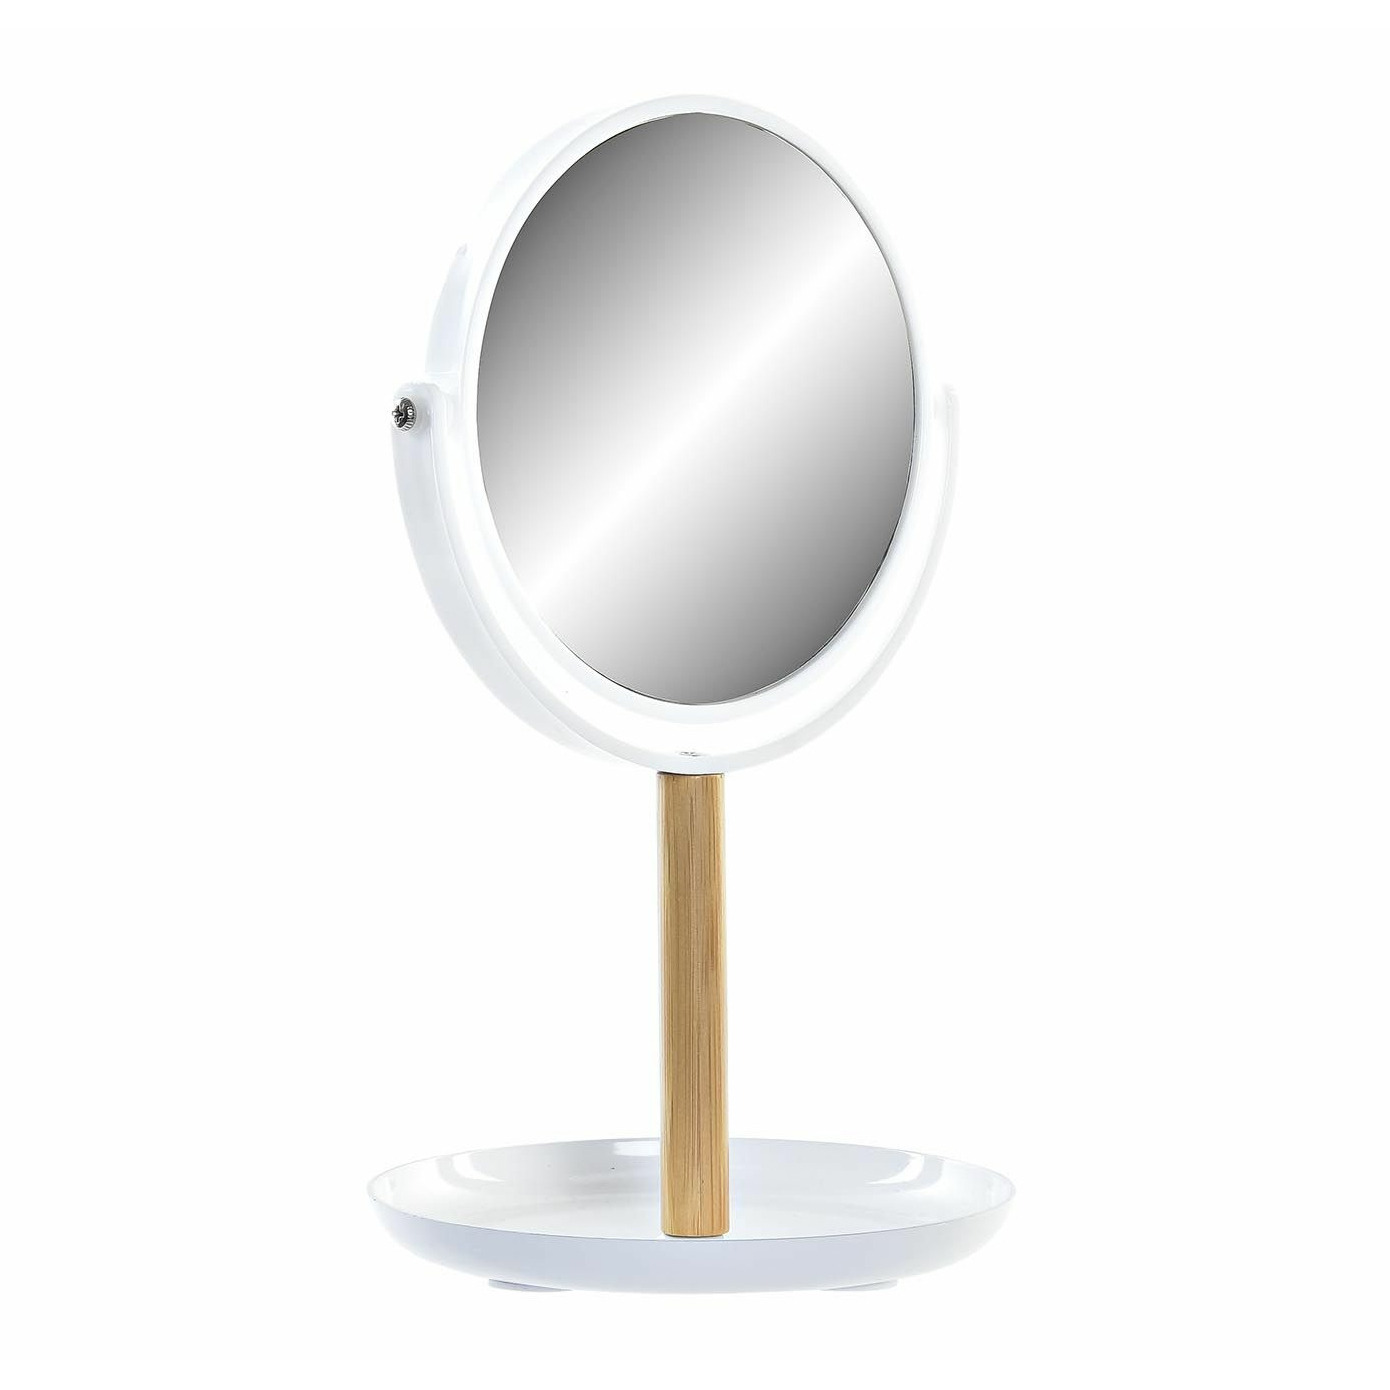 Items Make-up spiegel op standaard rond bamboe wit 34 cm